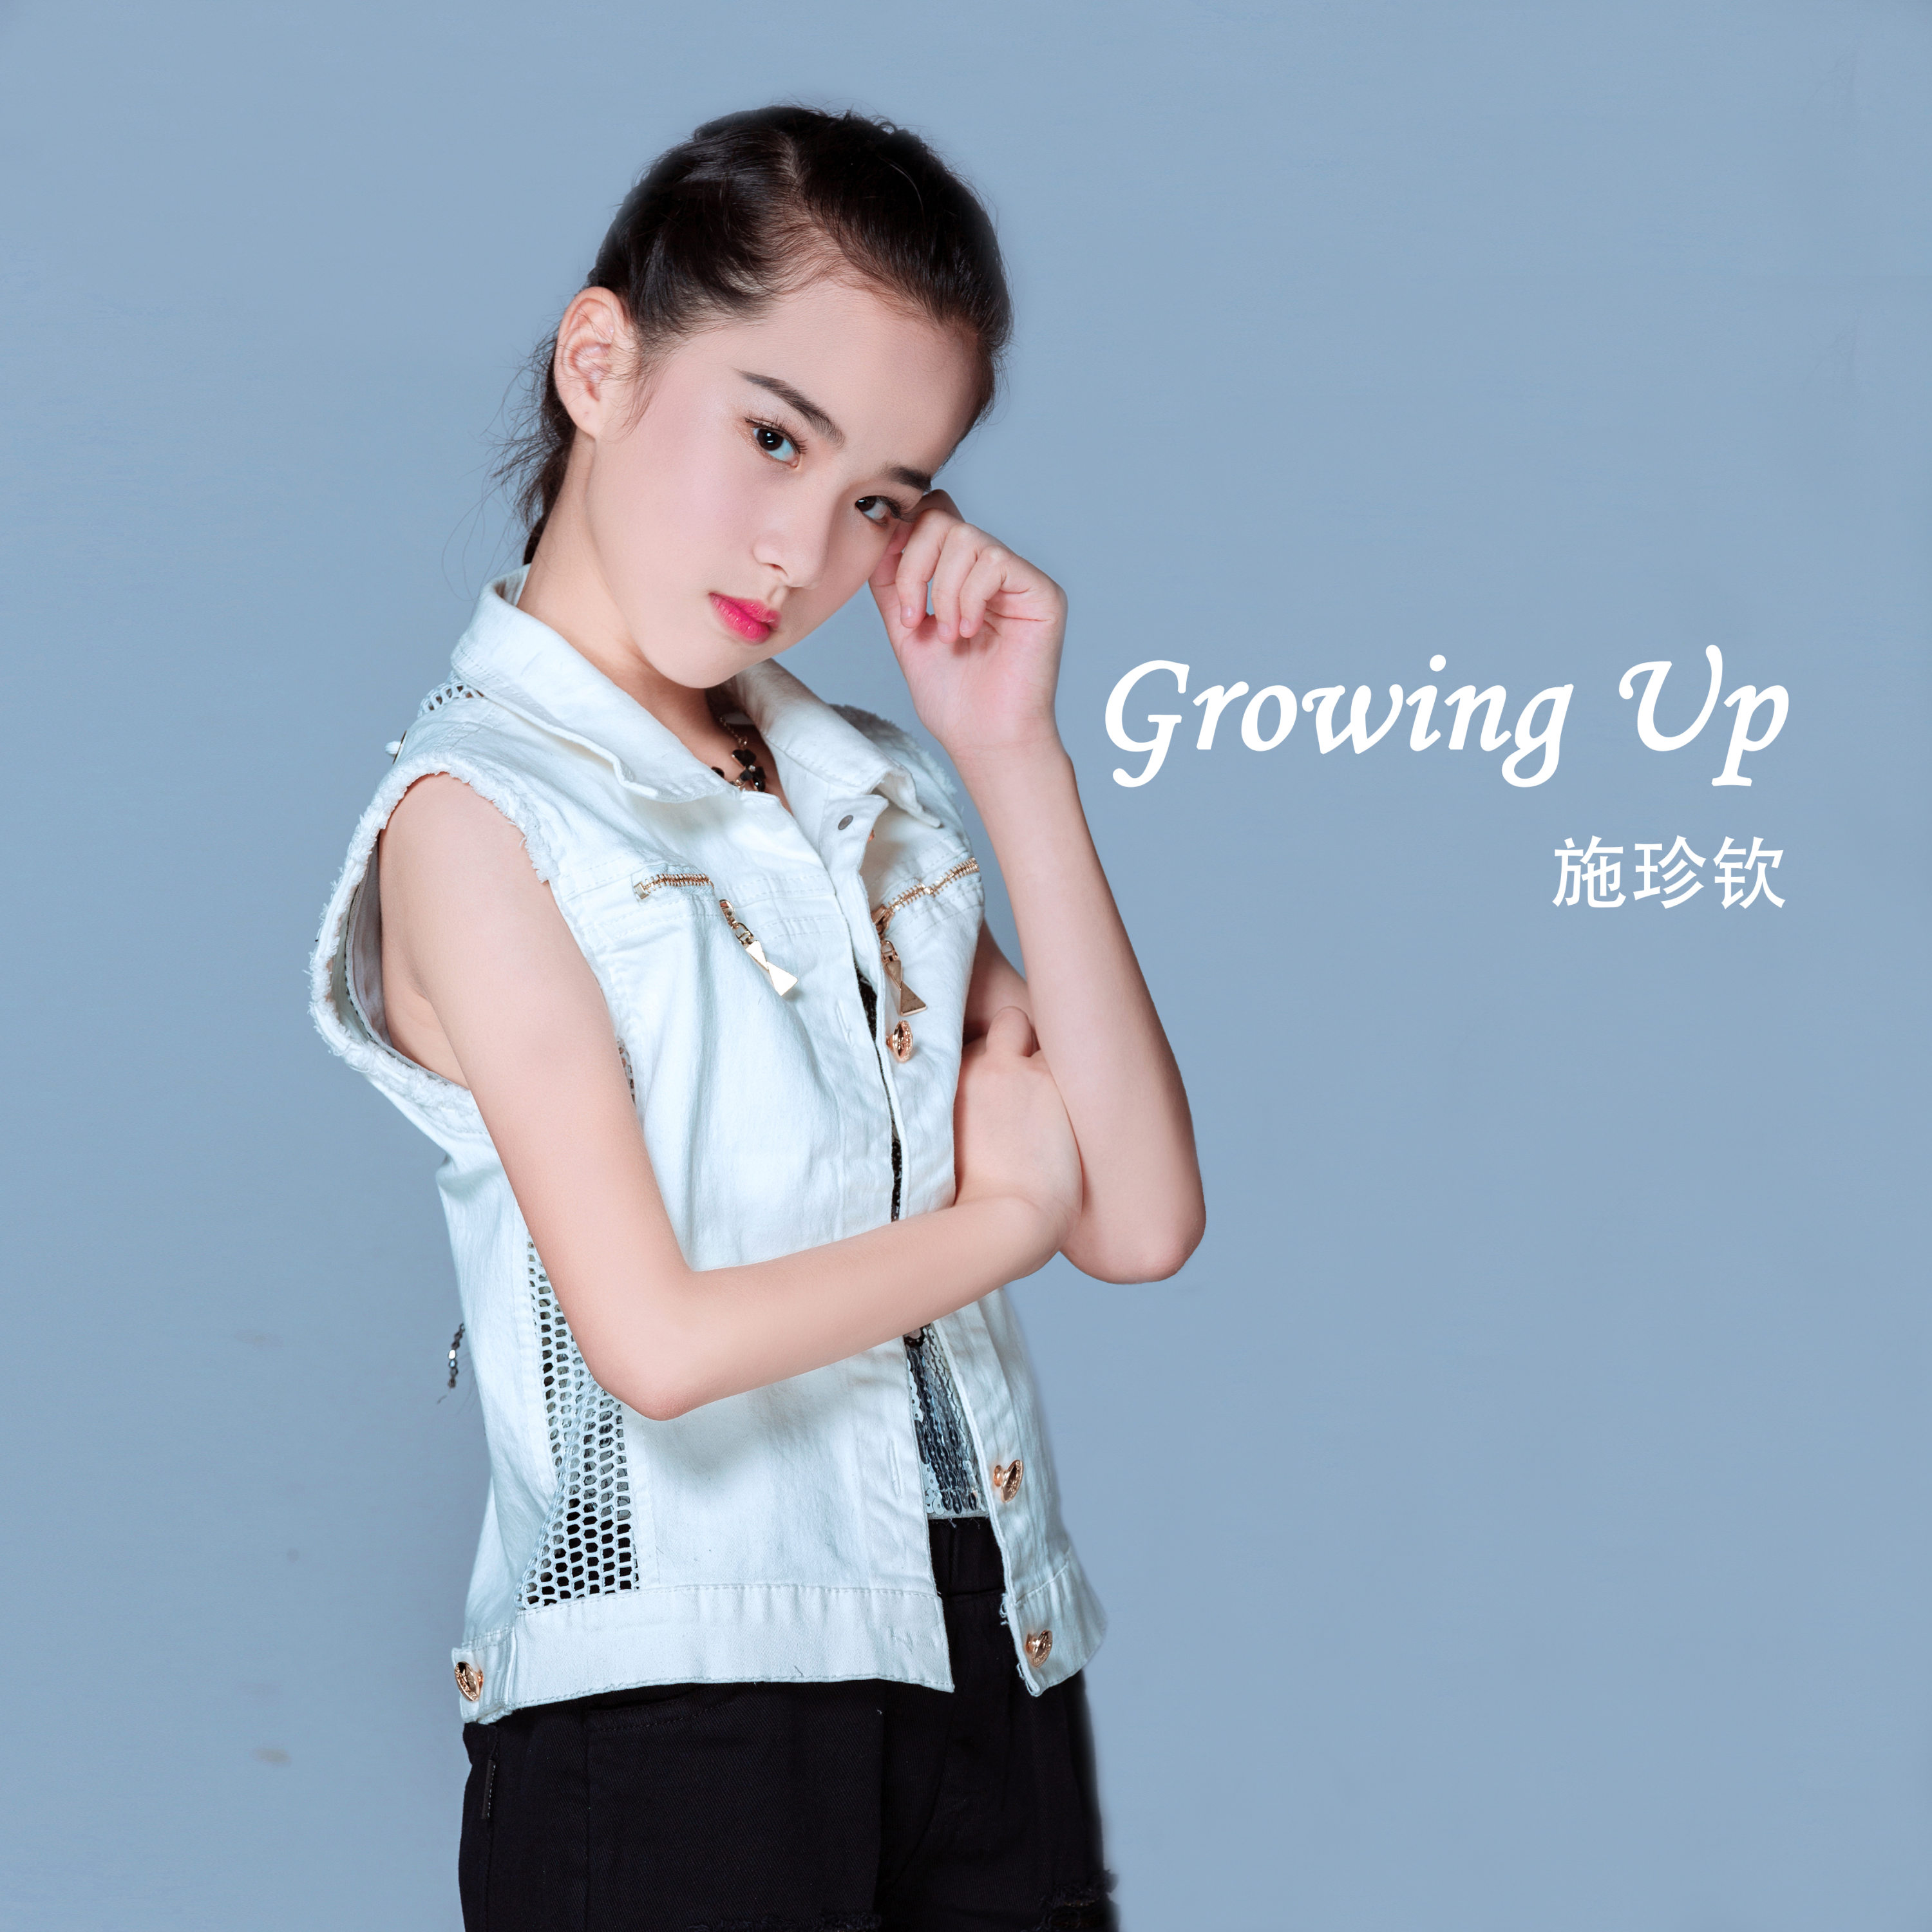 Growing Up(施珍欽演唱歌曲)